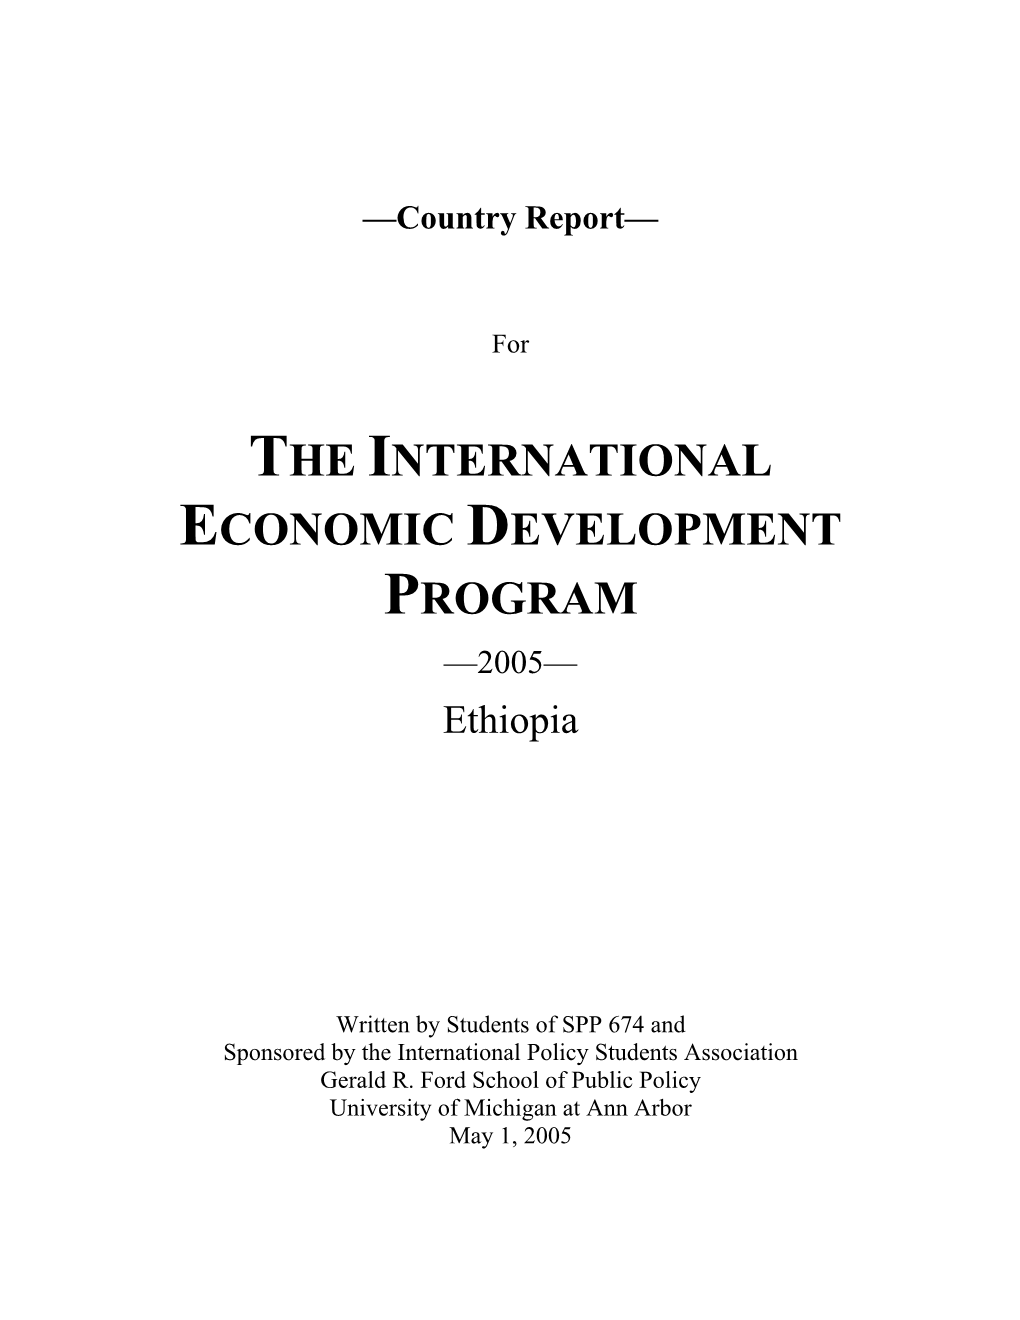 The International Economic Development Program